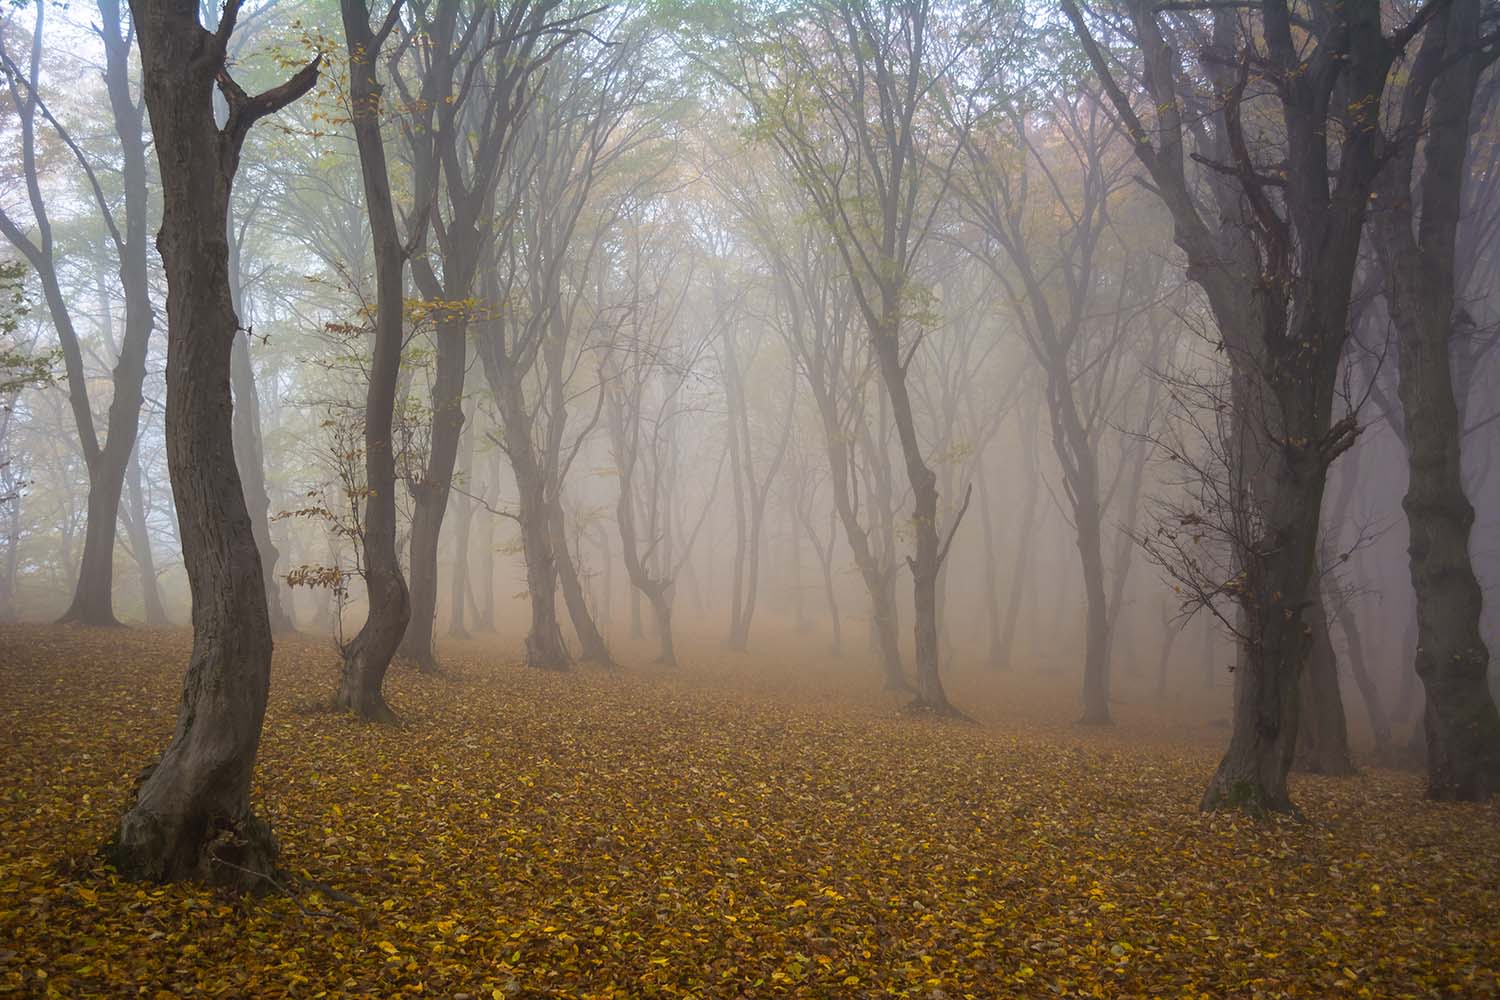 Hoia-Baciu Forest in Romania